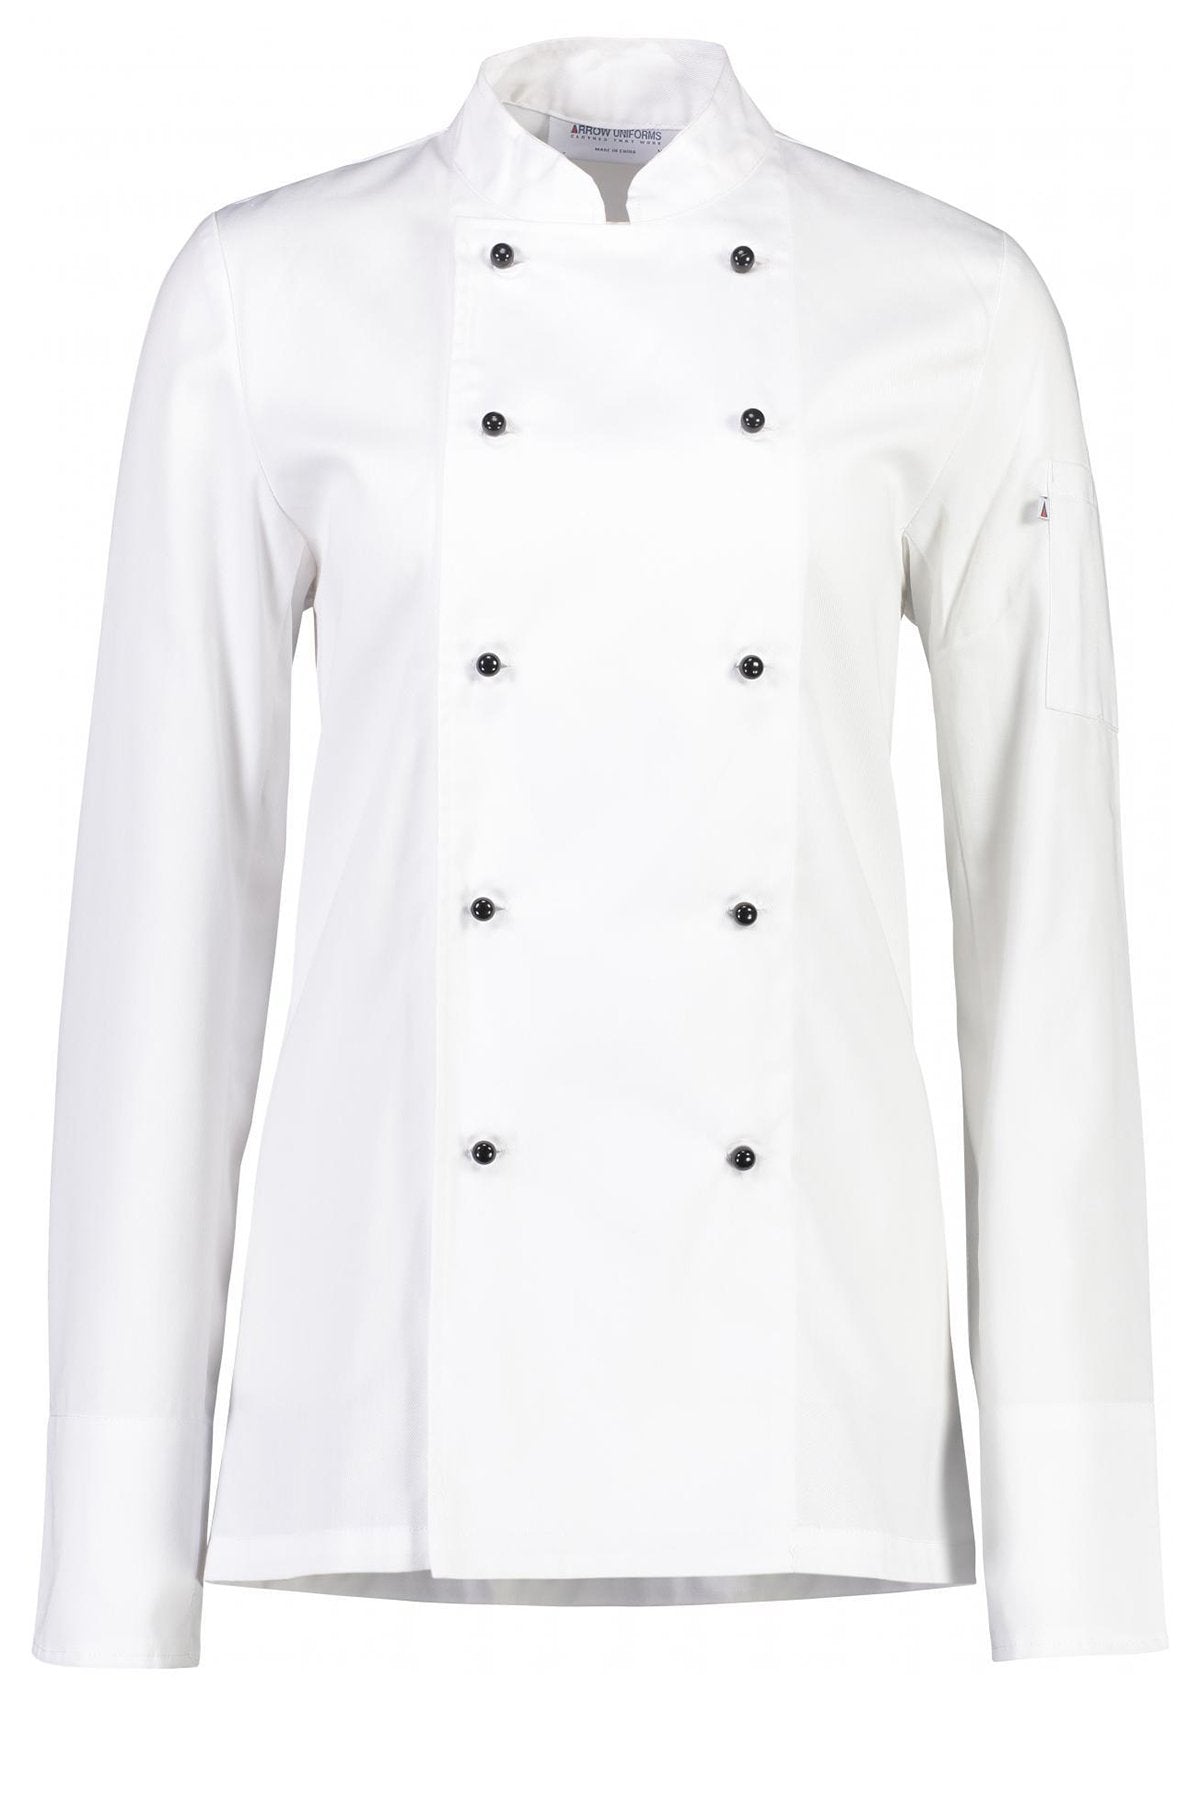 Club II Chefs Jacket Long Sleeve